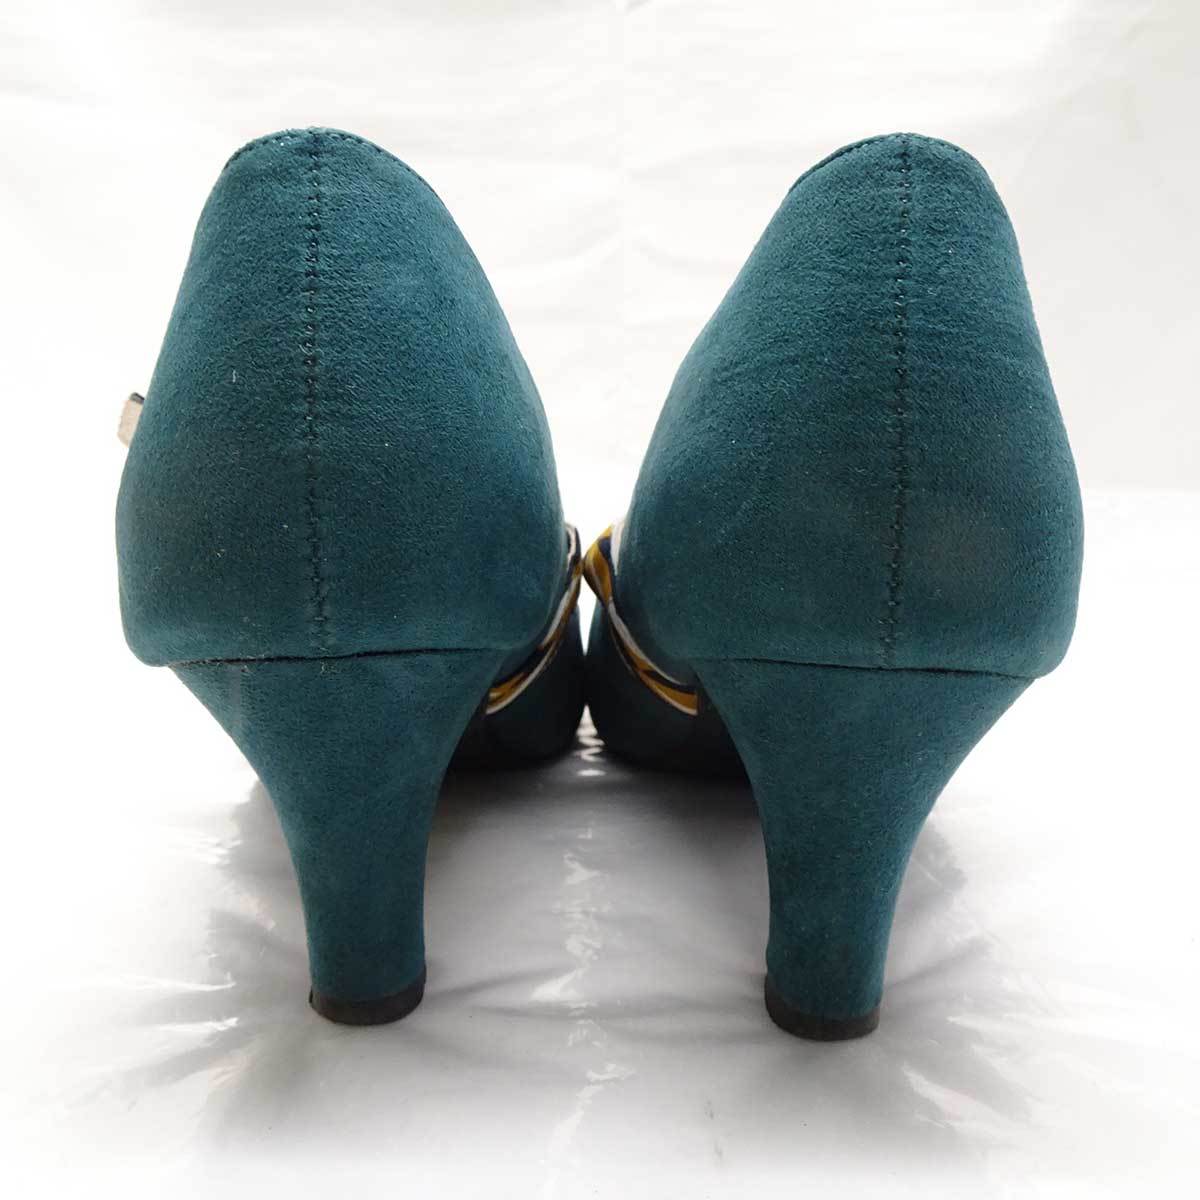 [ б/у ]ORiental TRafficolientaru трафик каблук туфли-лодочки оттенок зеленого женский размер 37 (23.5cm)